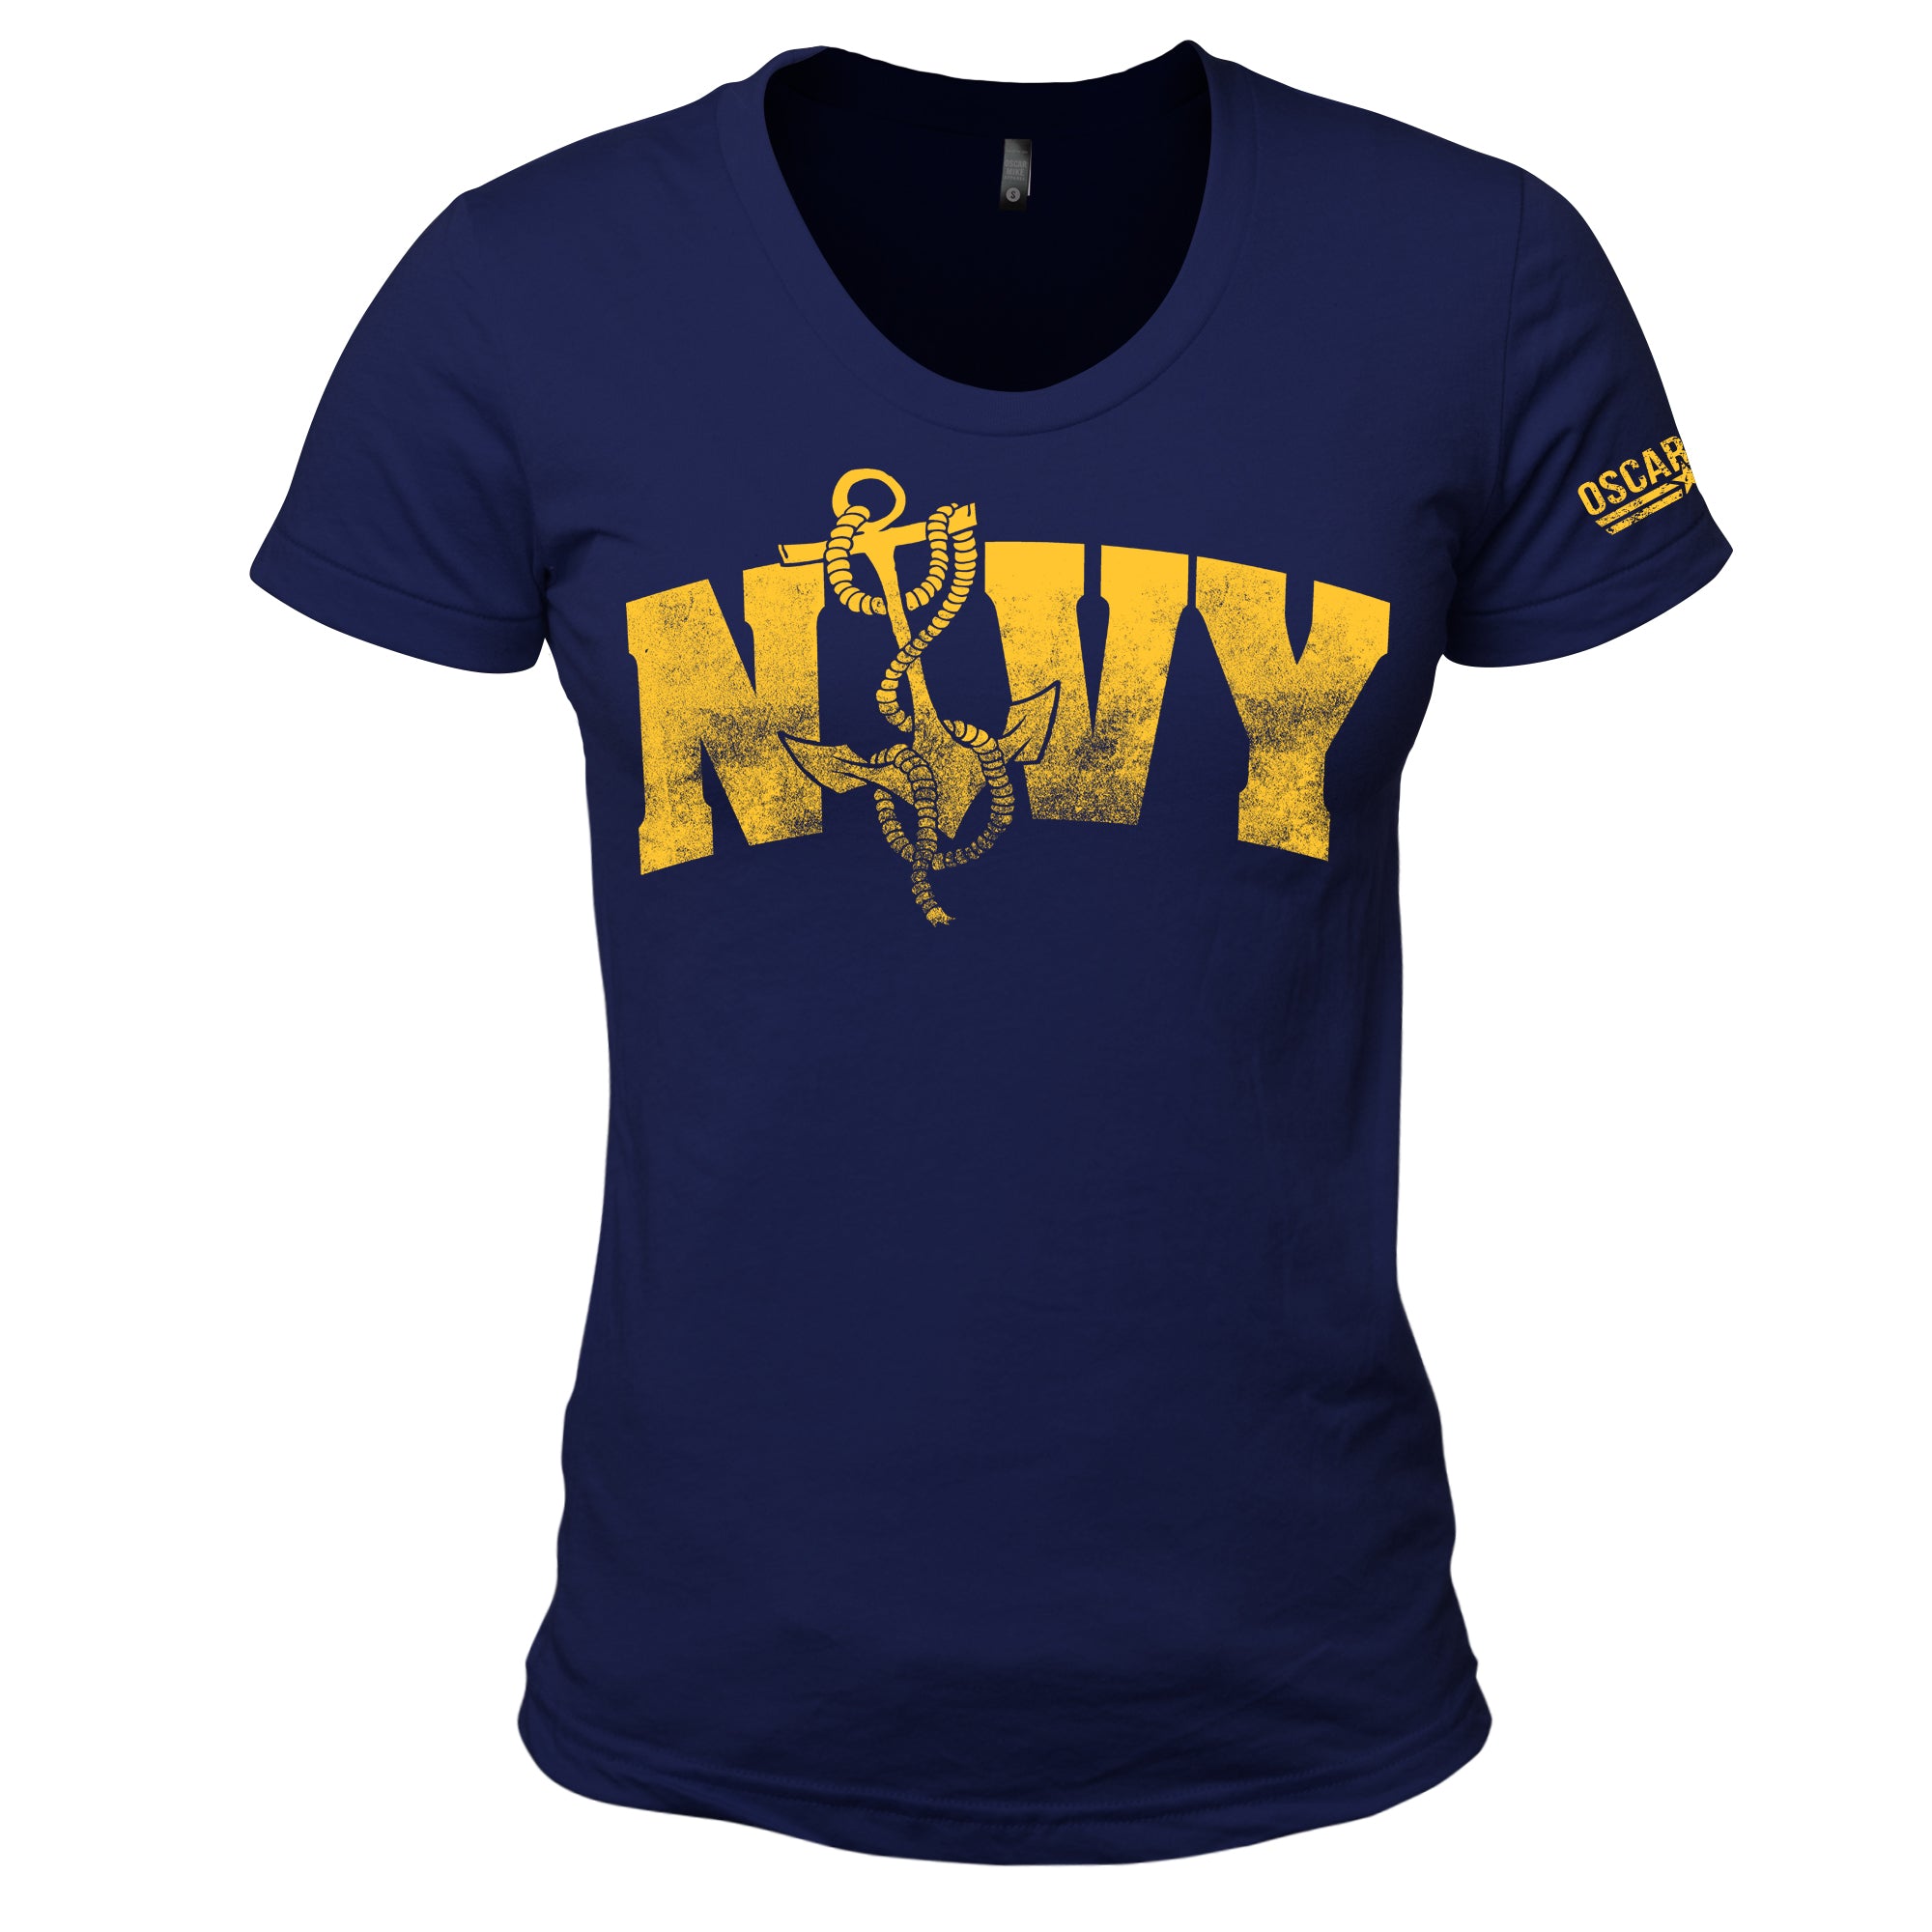 Women's Navy Anchor Tee